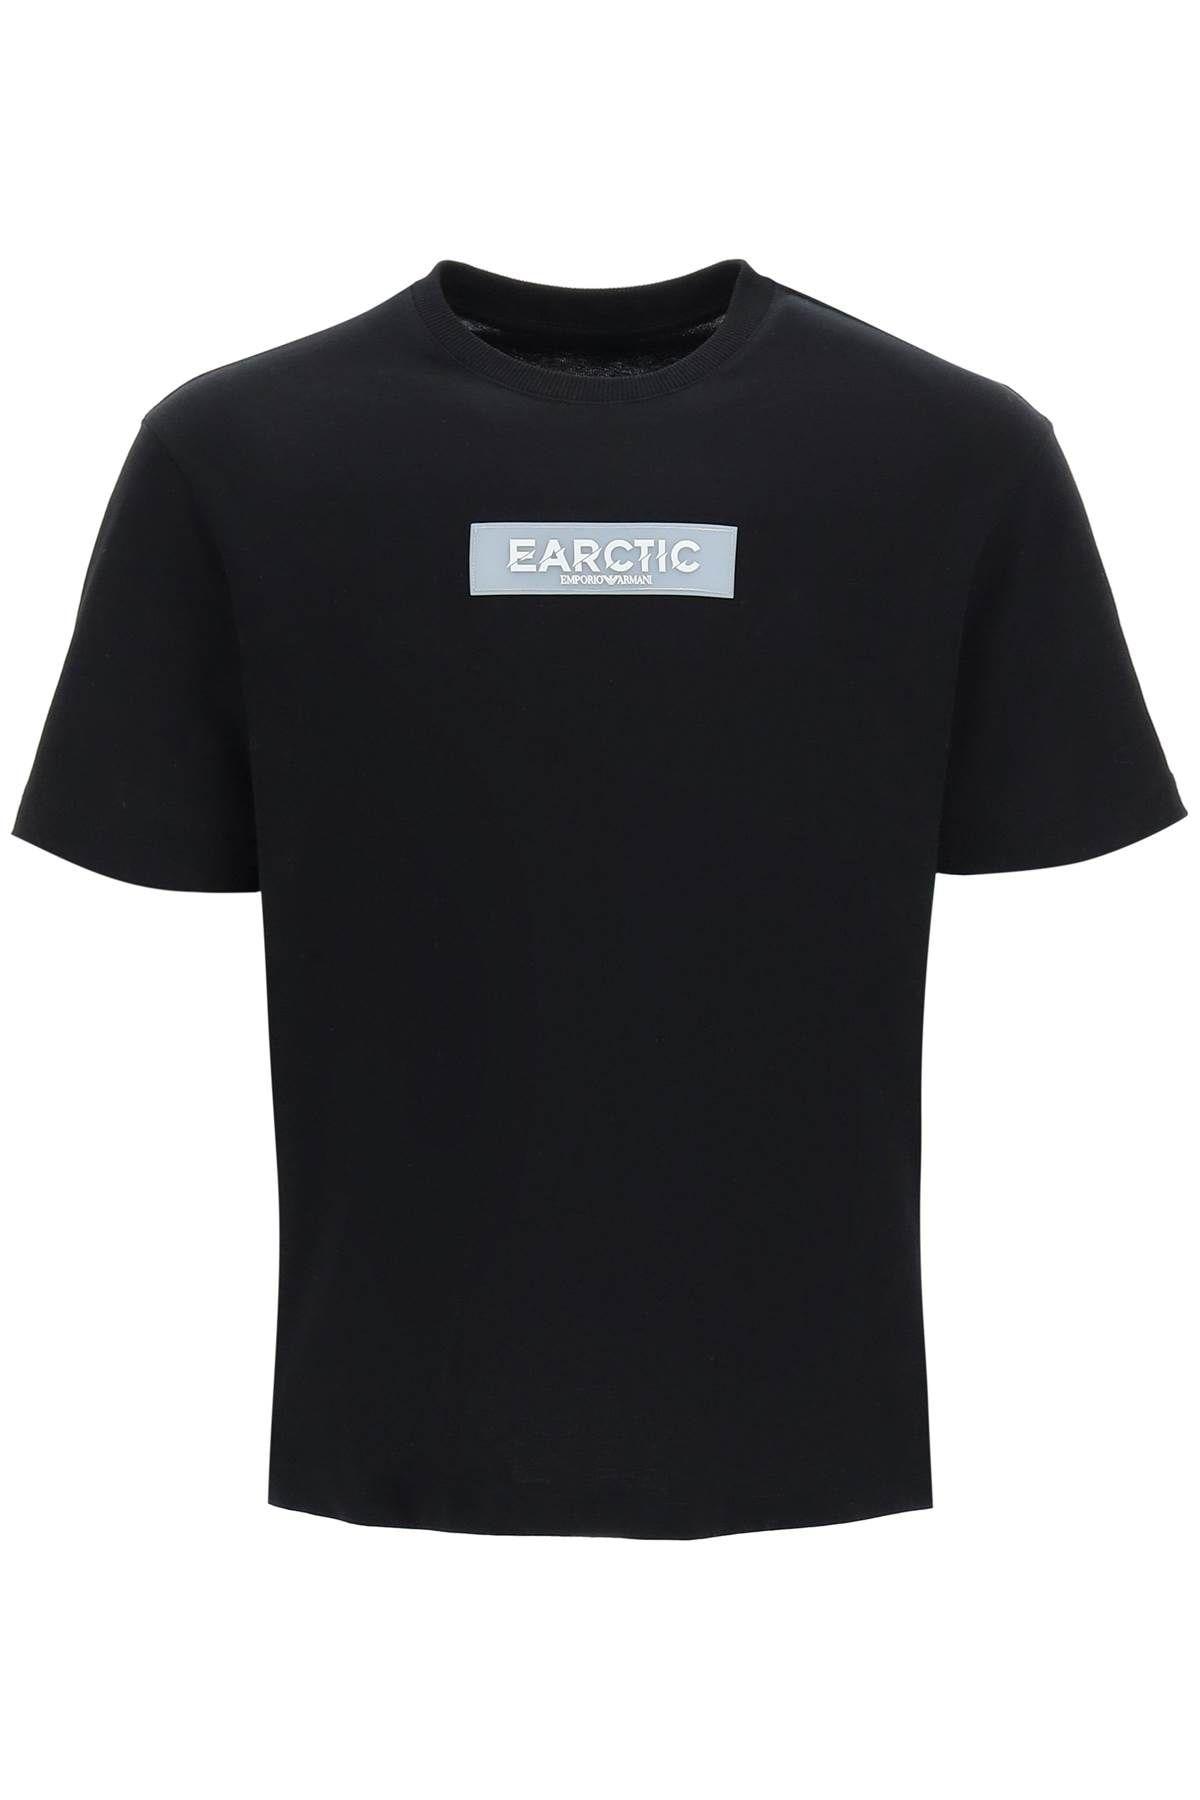 Emporio Armani Earctic Patch T-shirt